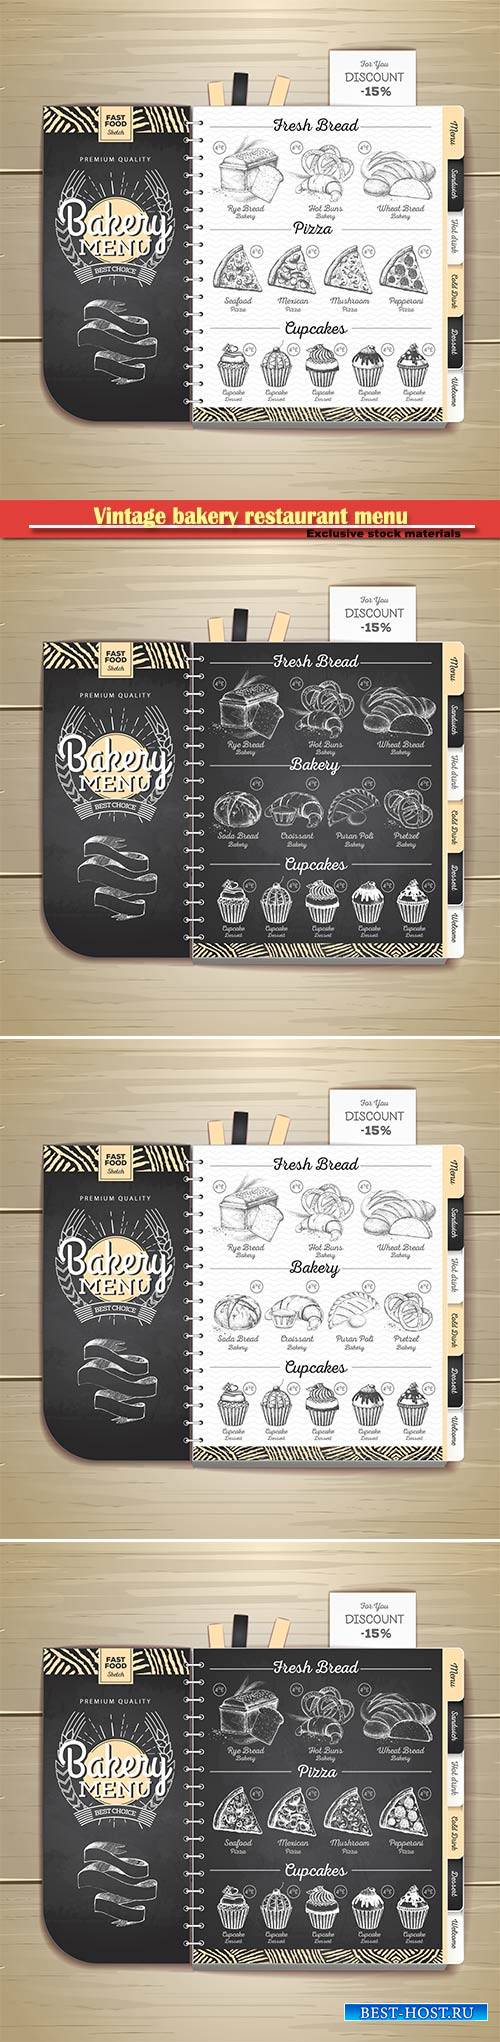 Vintage chalk drawing bakery restaurant menu design  vector illustration